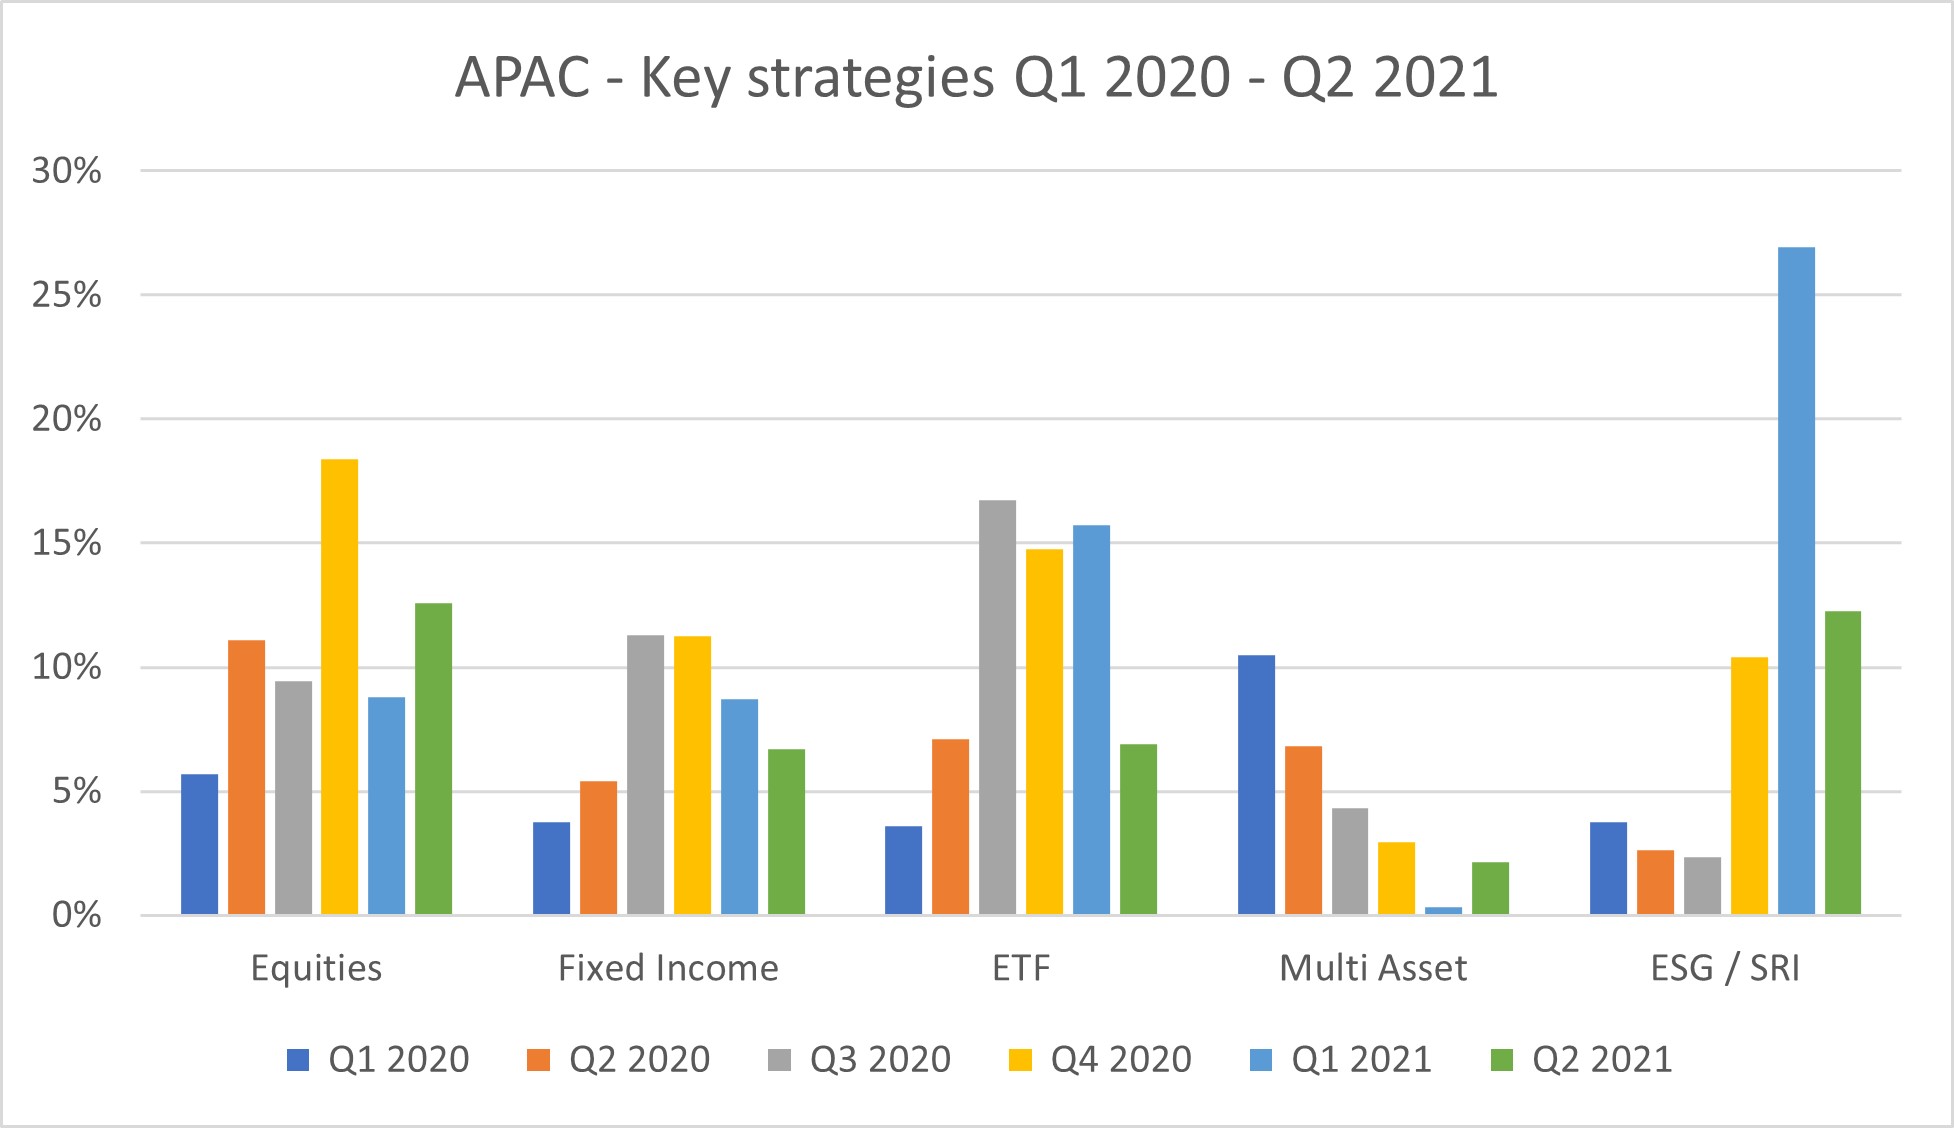 APAC key strategies Q2 2021